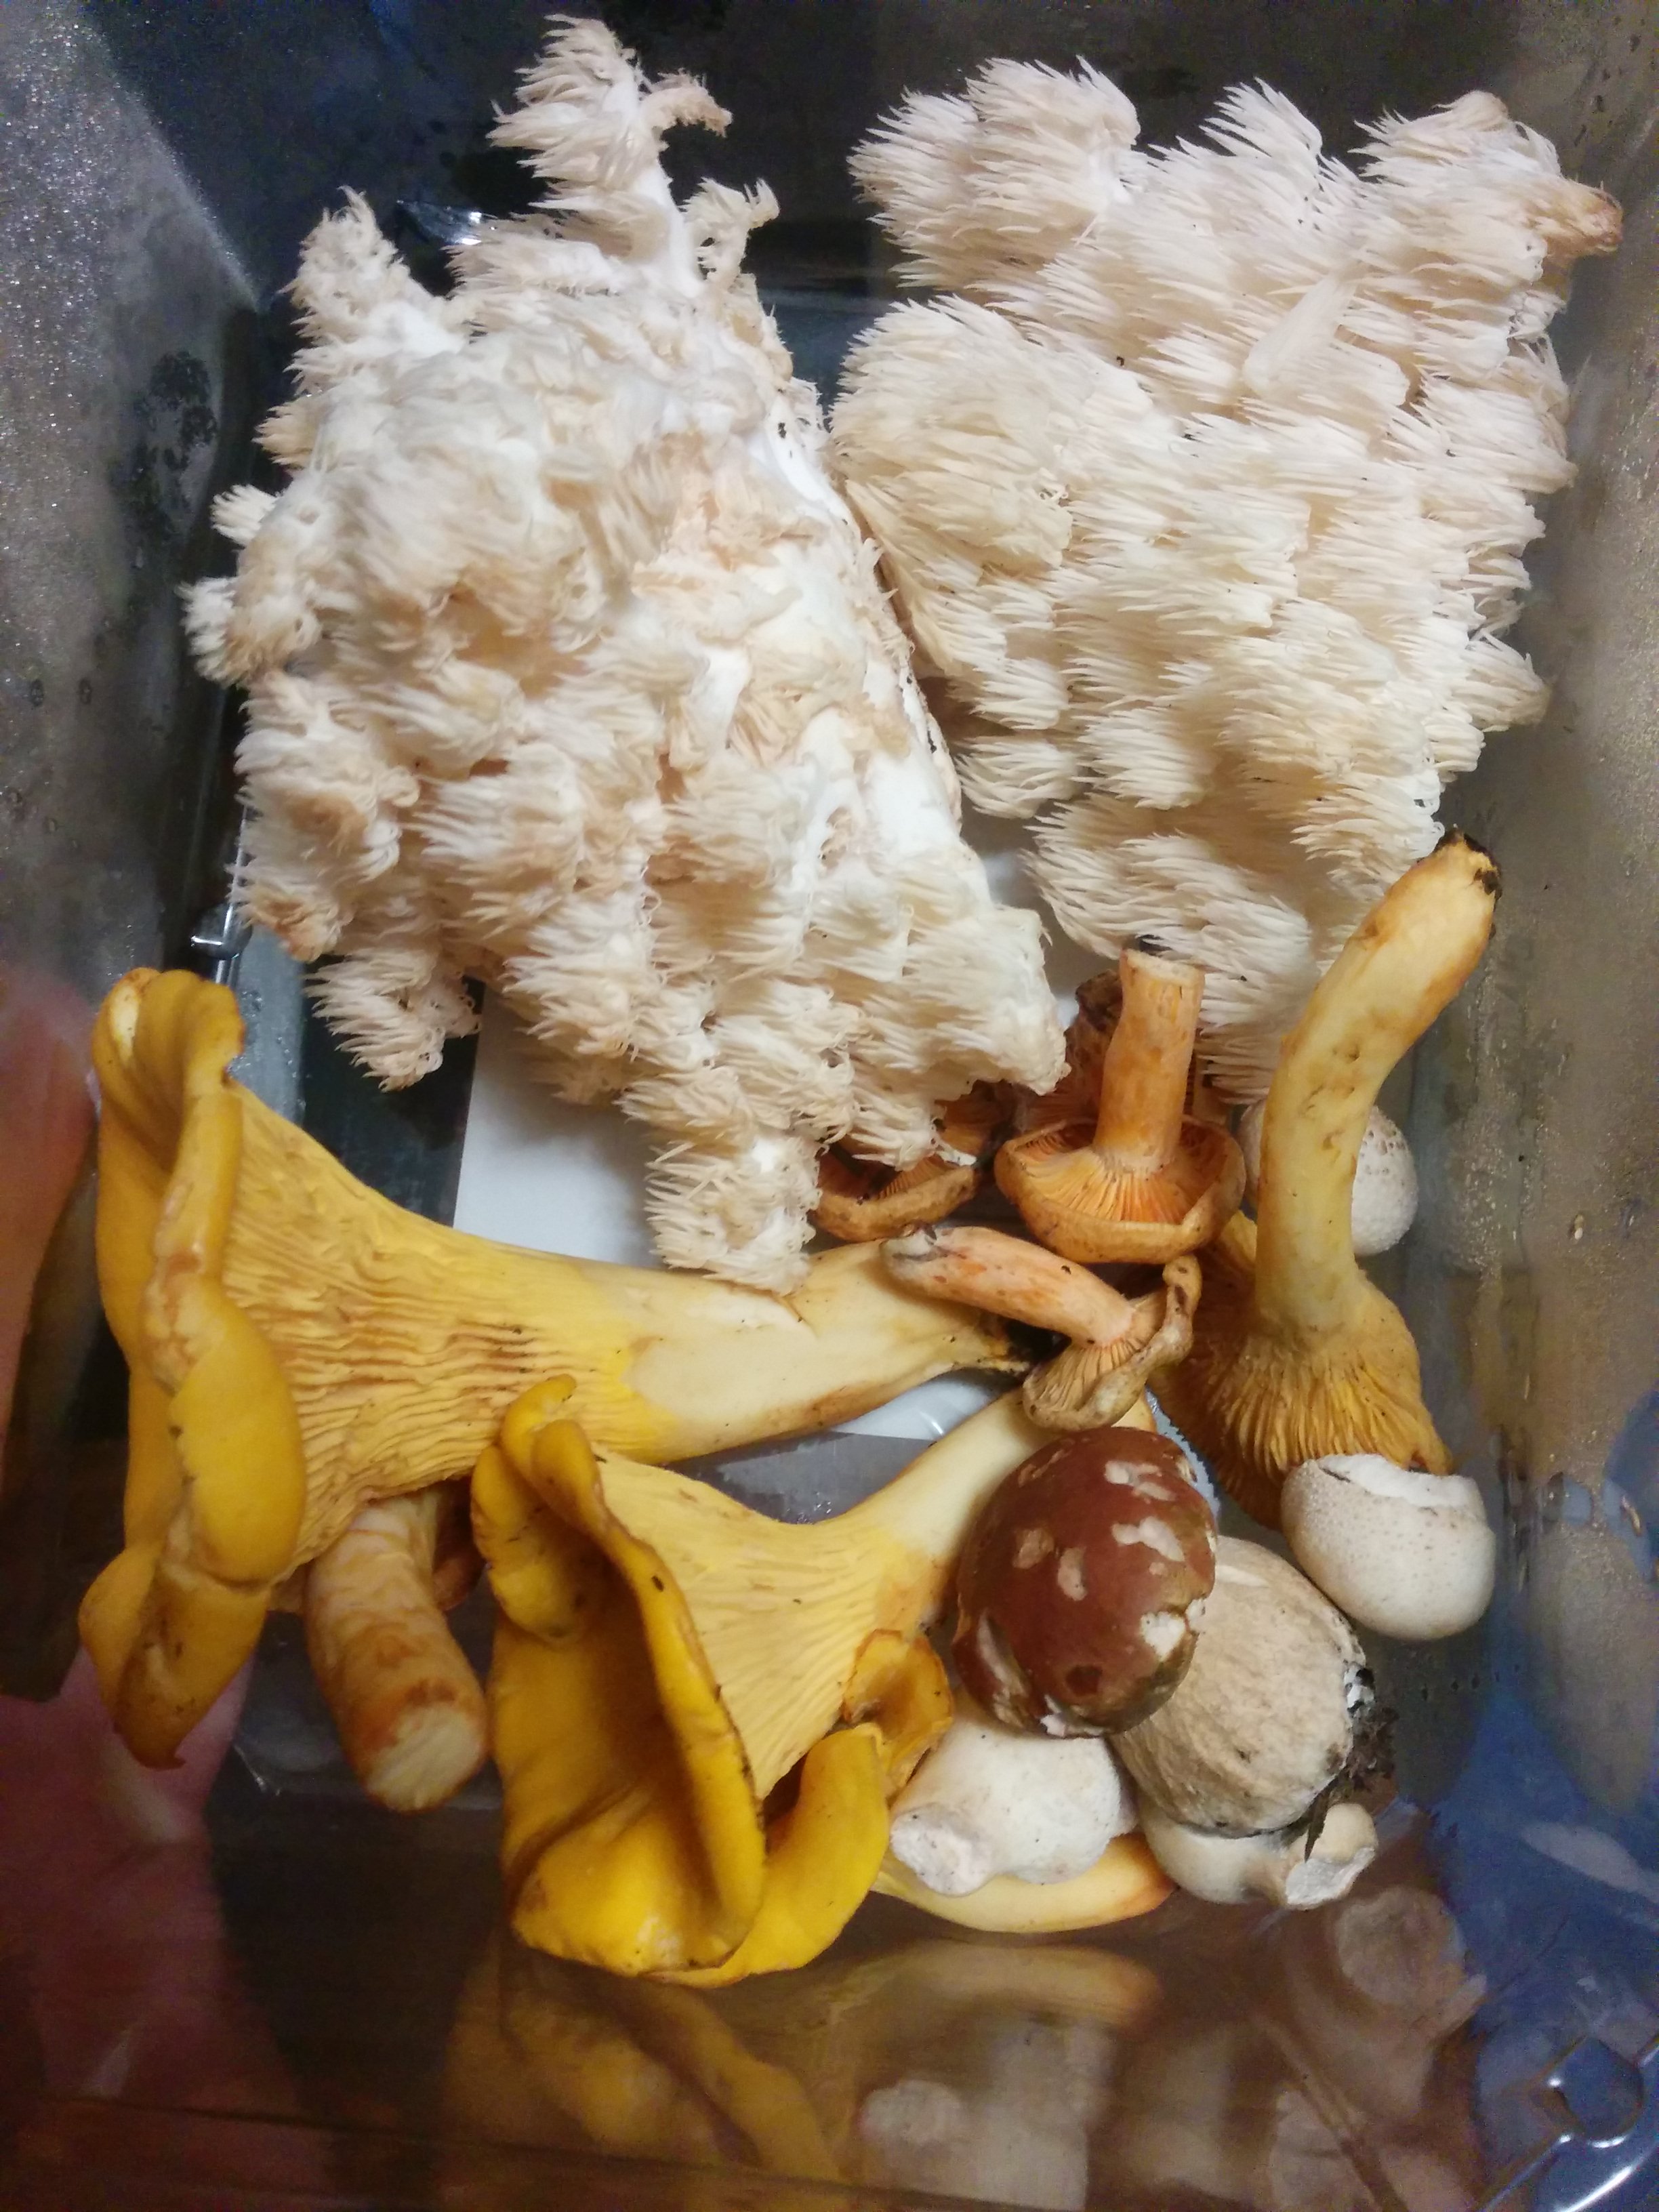 tub of mixed mushrooms